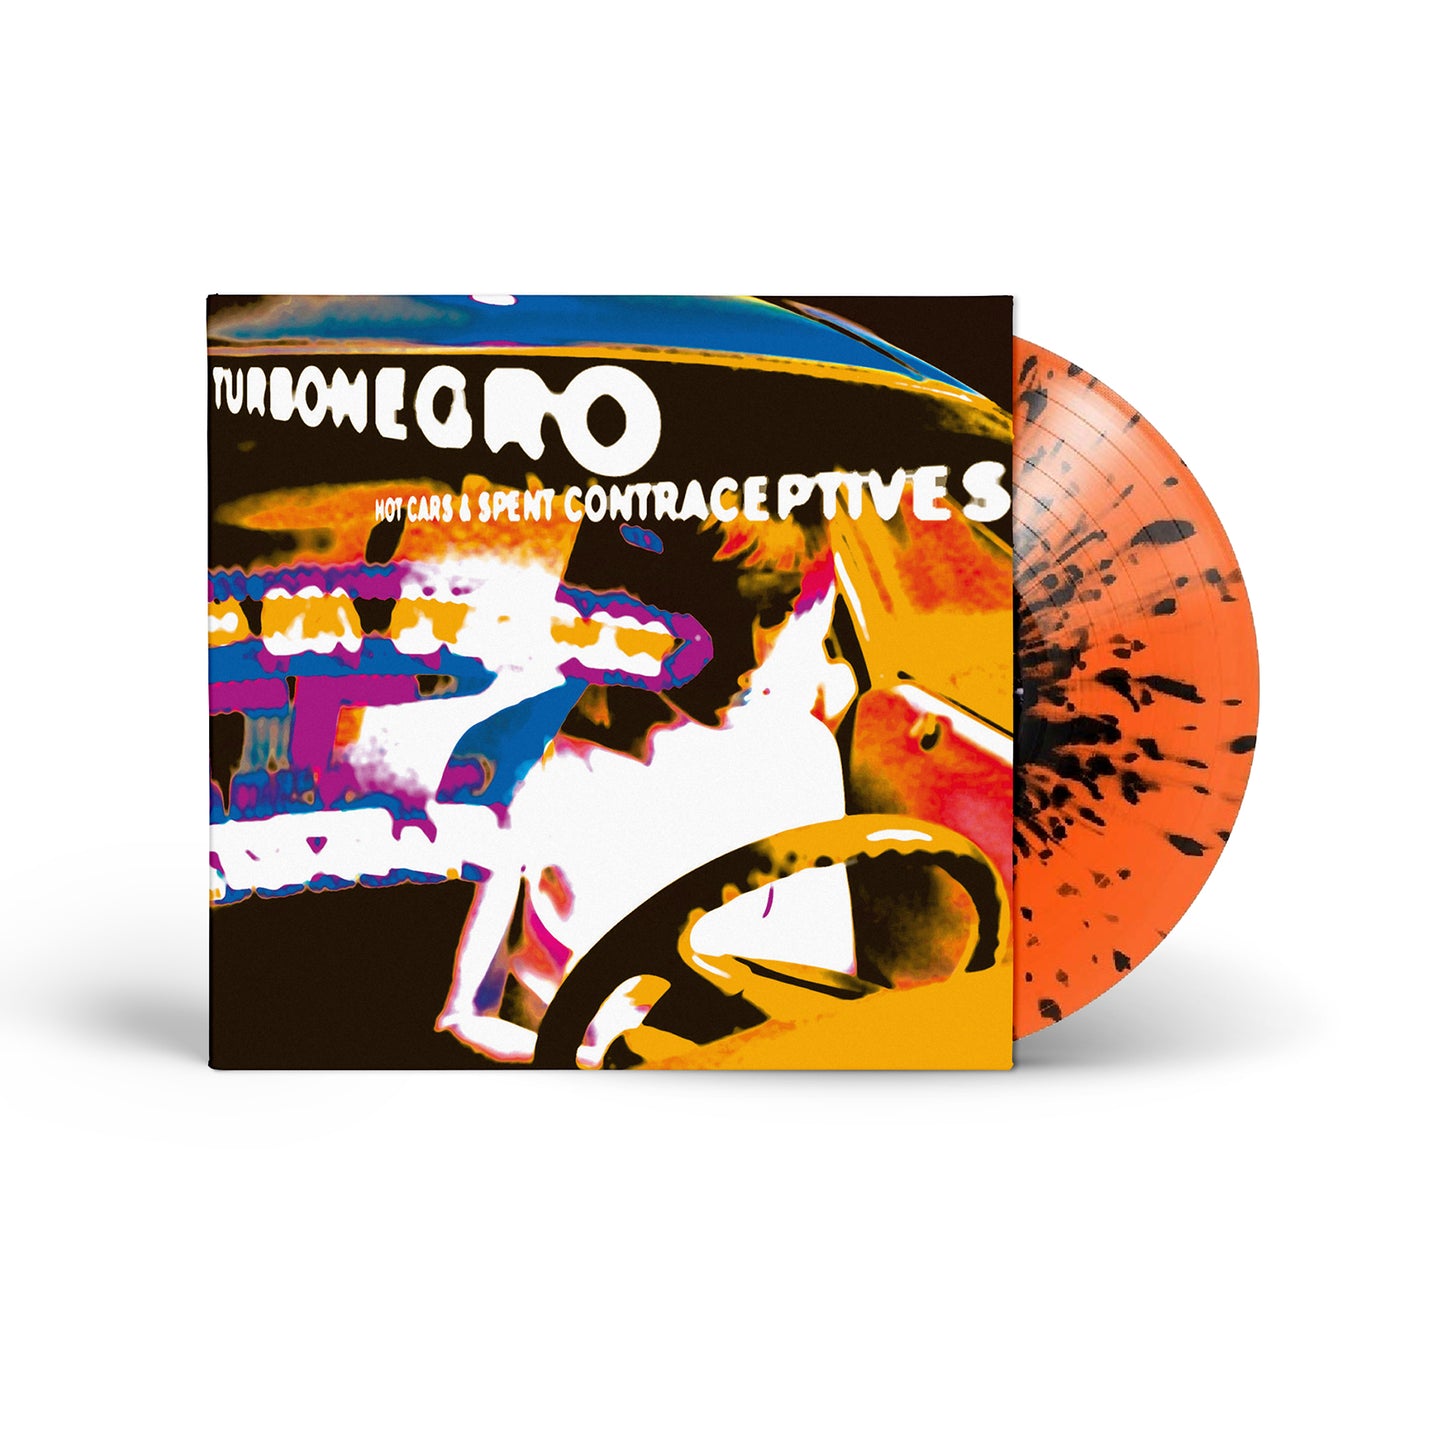 TURBONEGRO - Hot Cars & Spent Contraceptives (LP Orange Vinyl With Black Splatter)